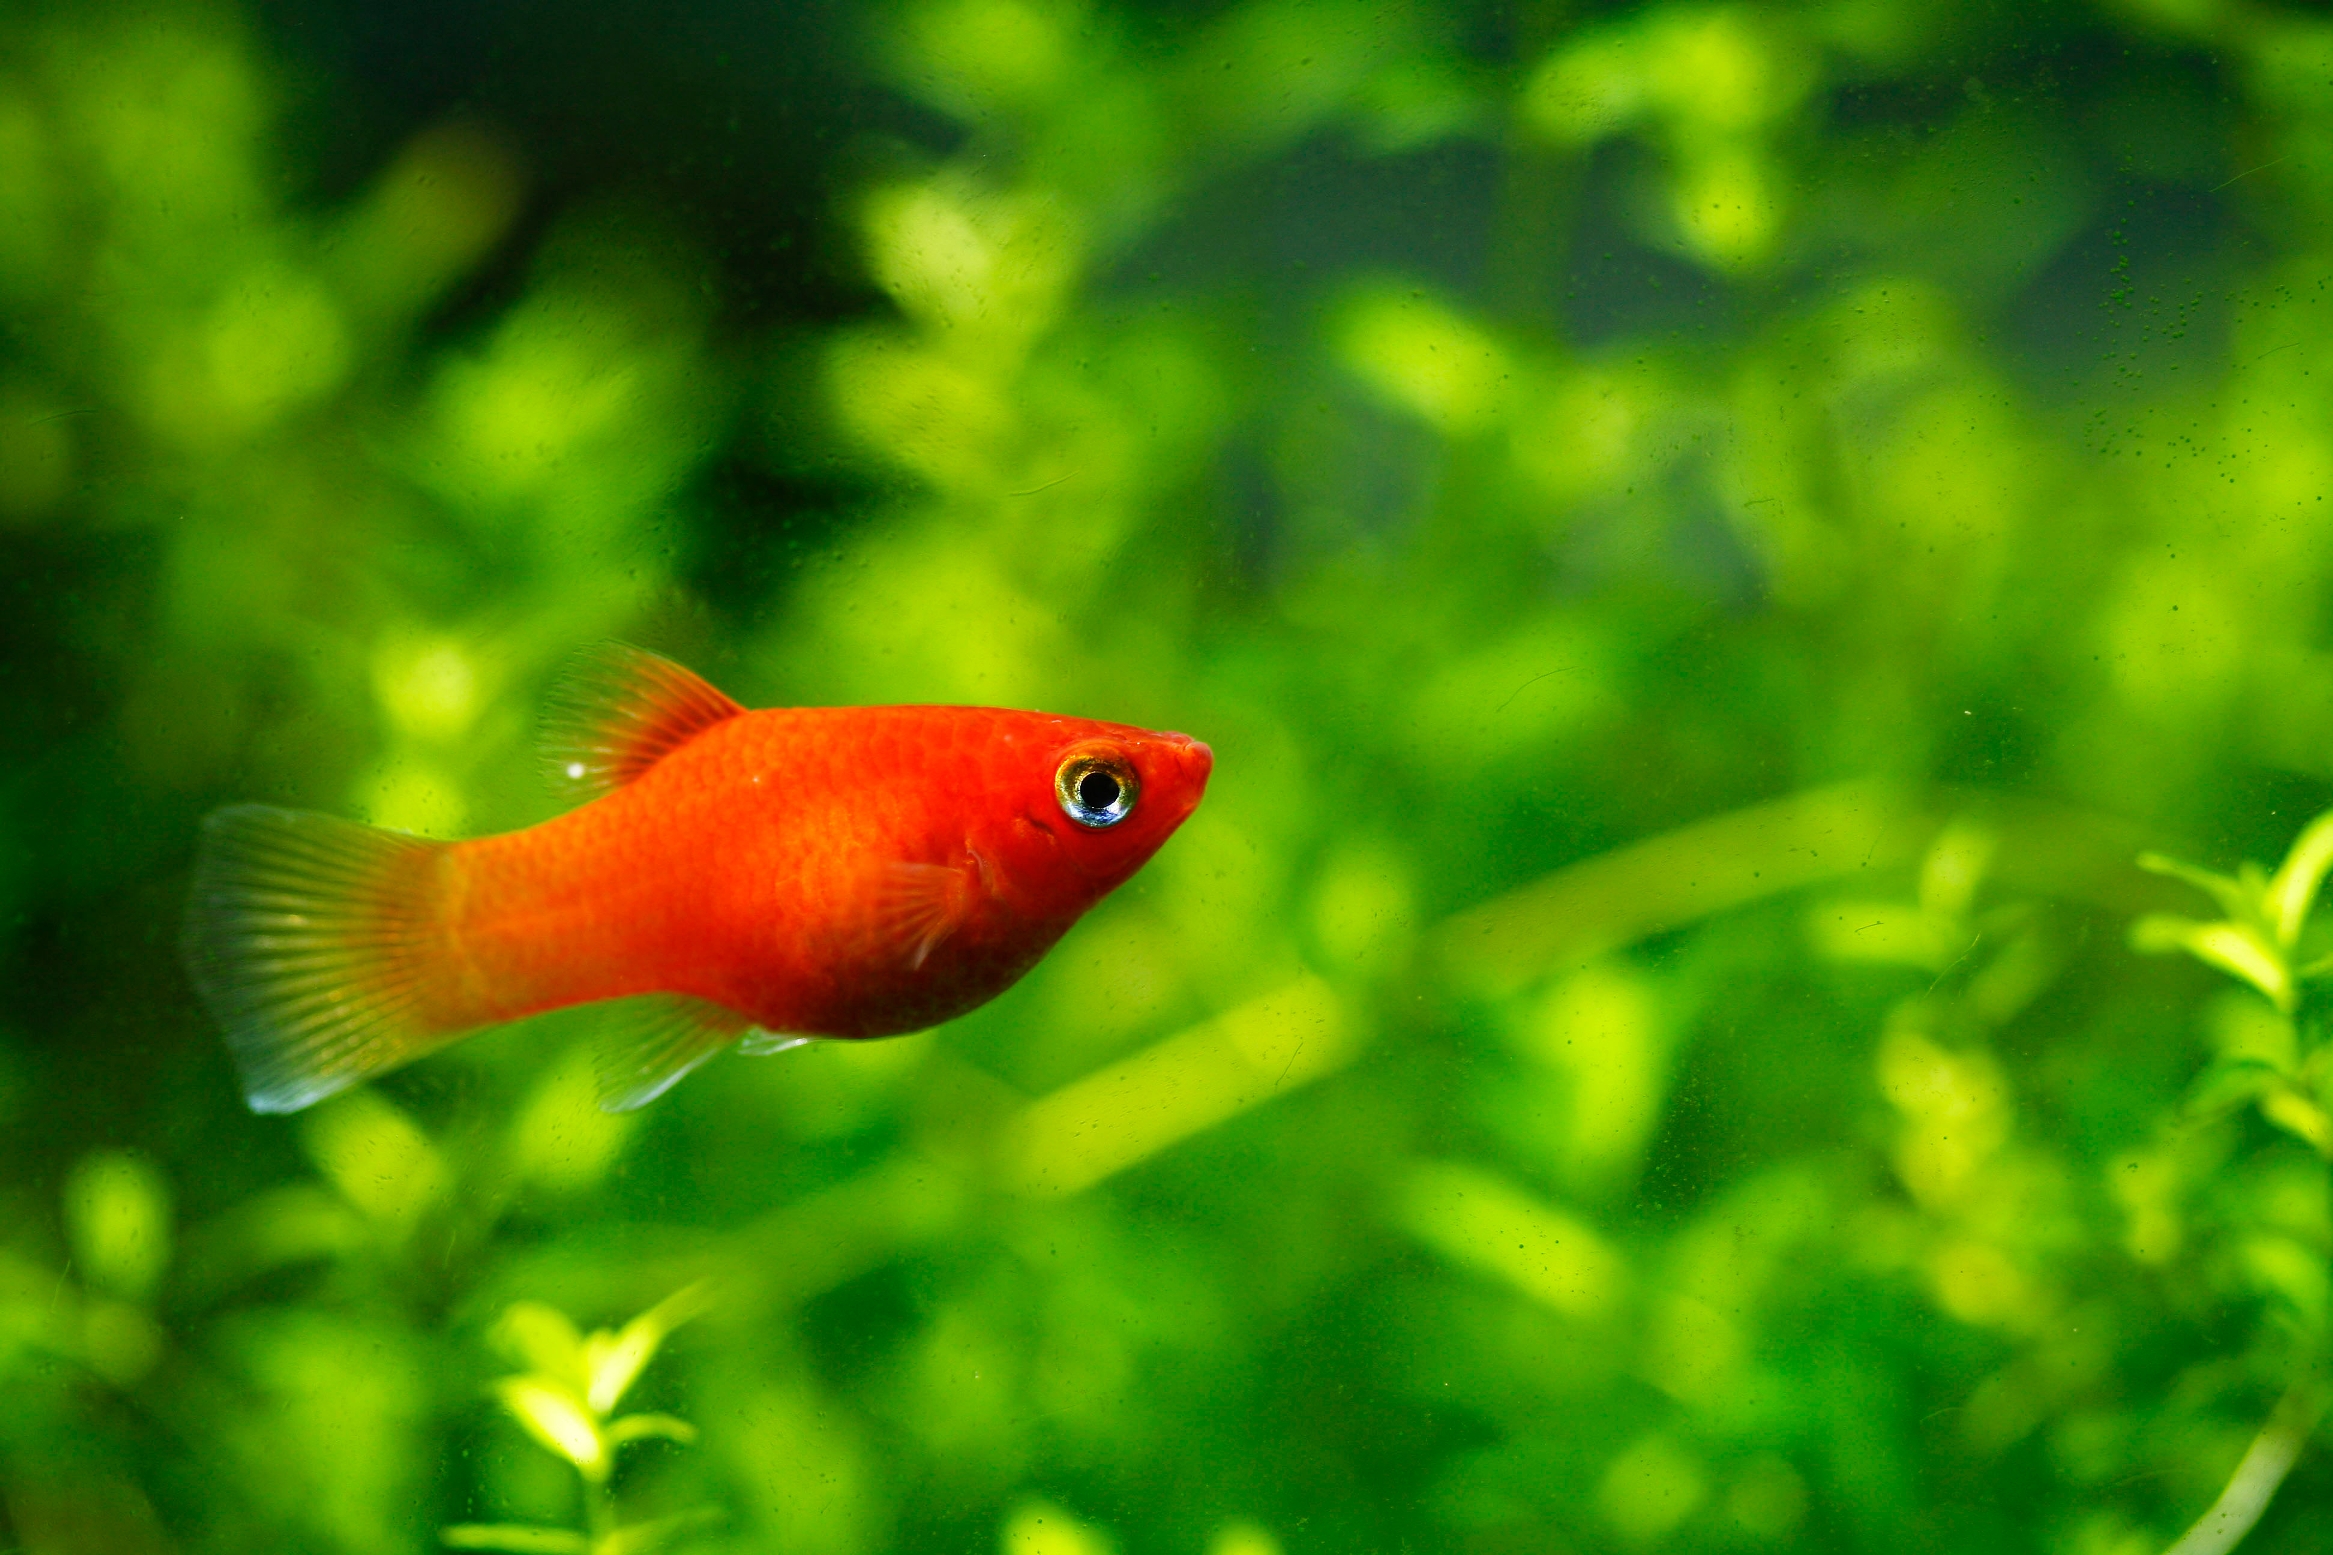 Red platy fish